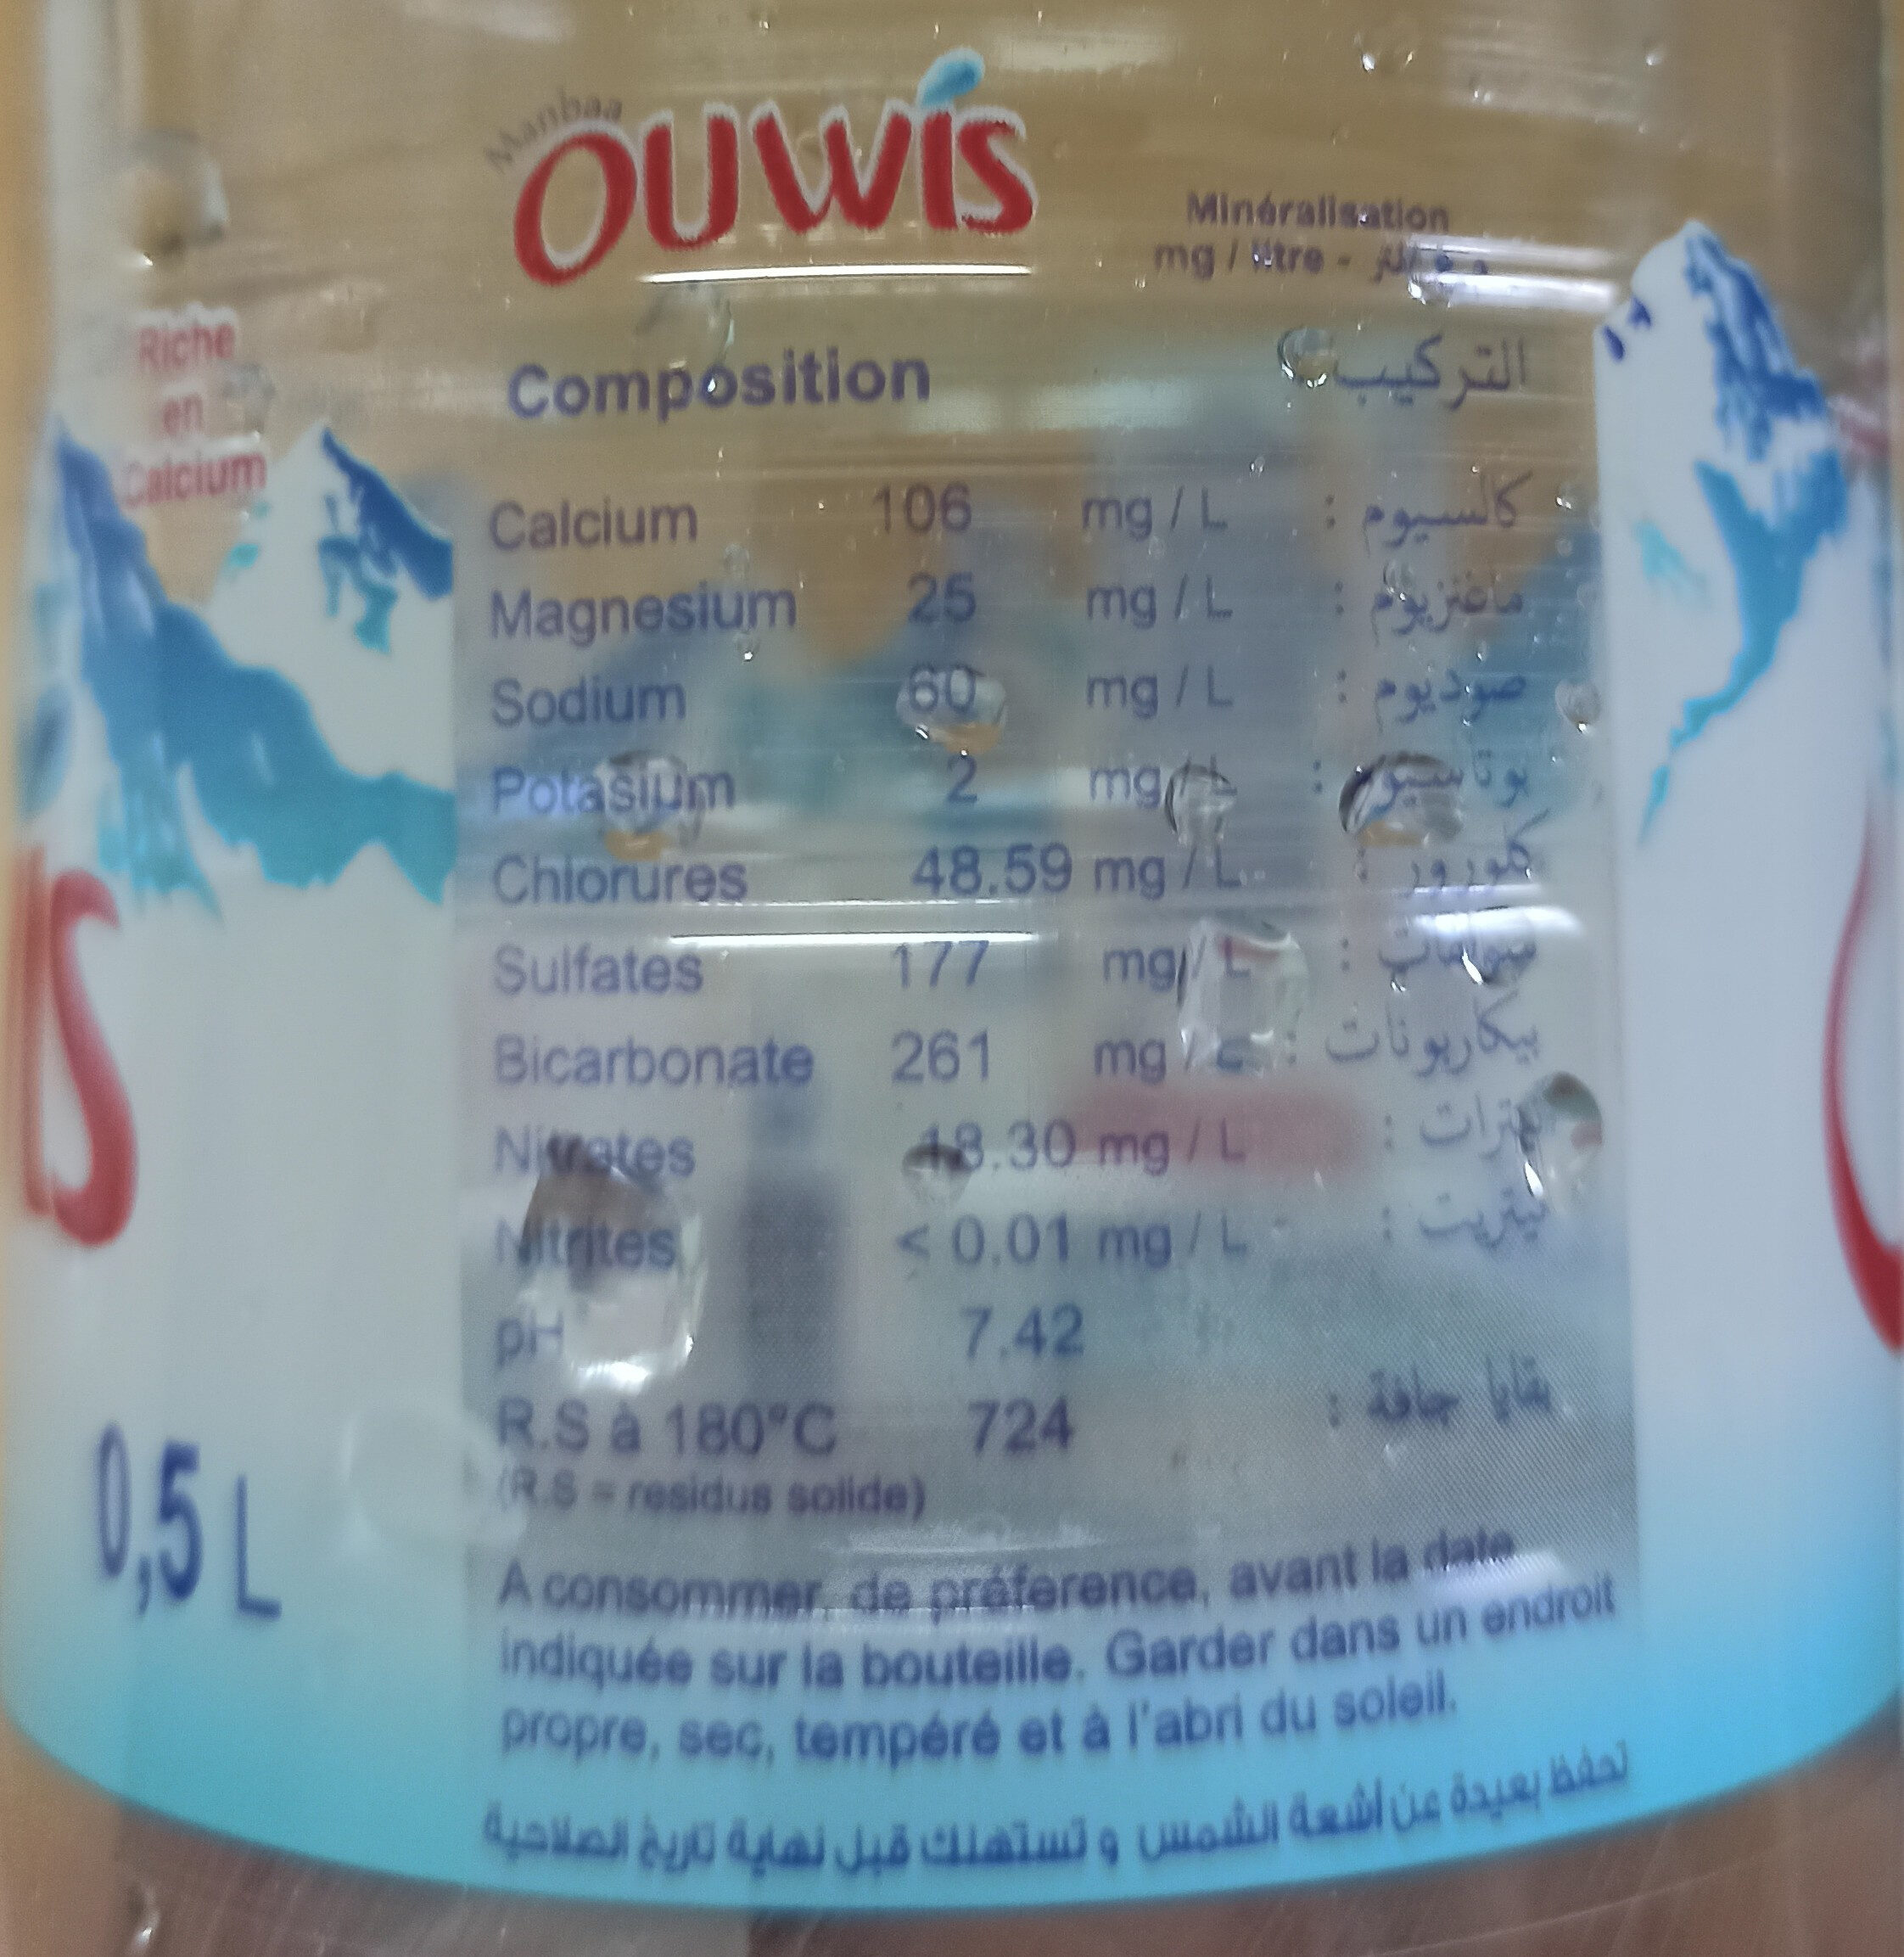 Ouwis 0.5l - Ingredients - fr